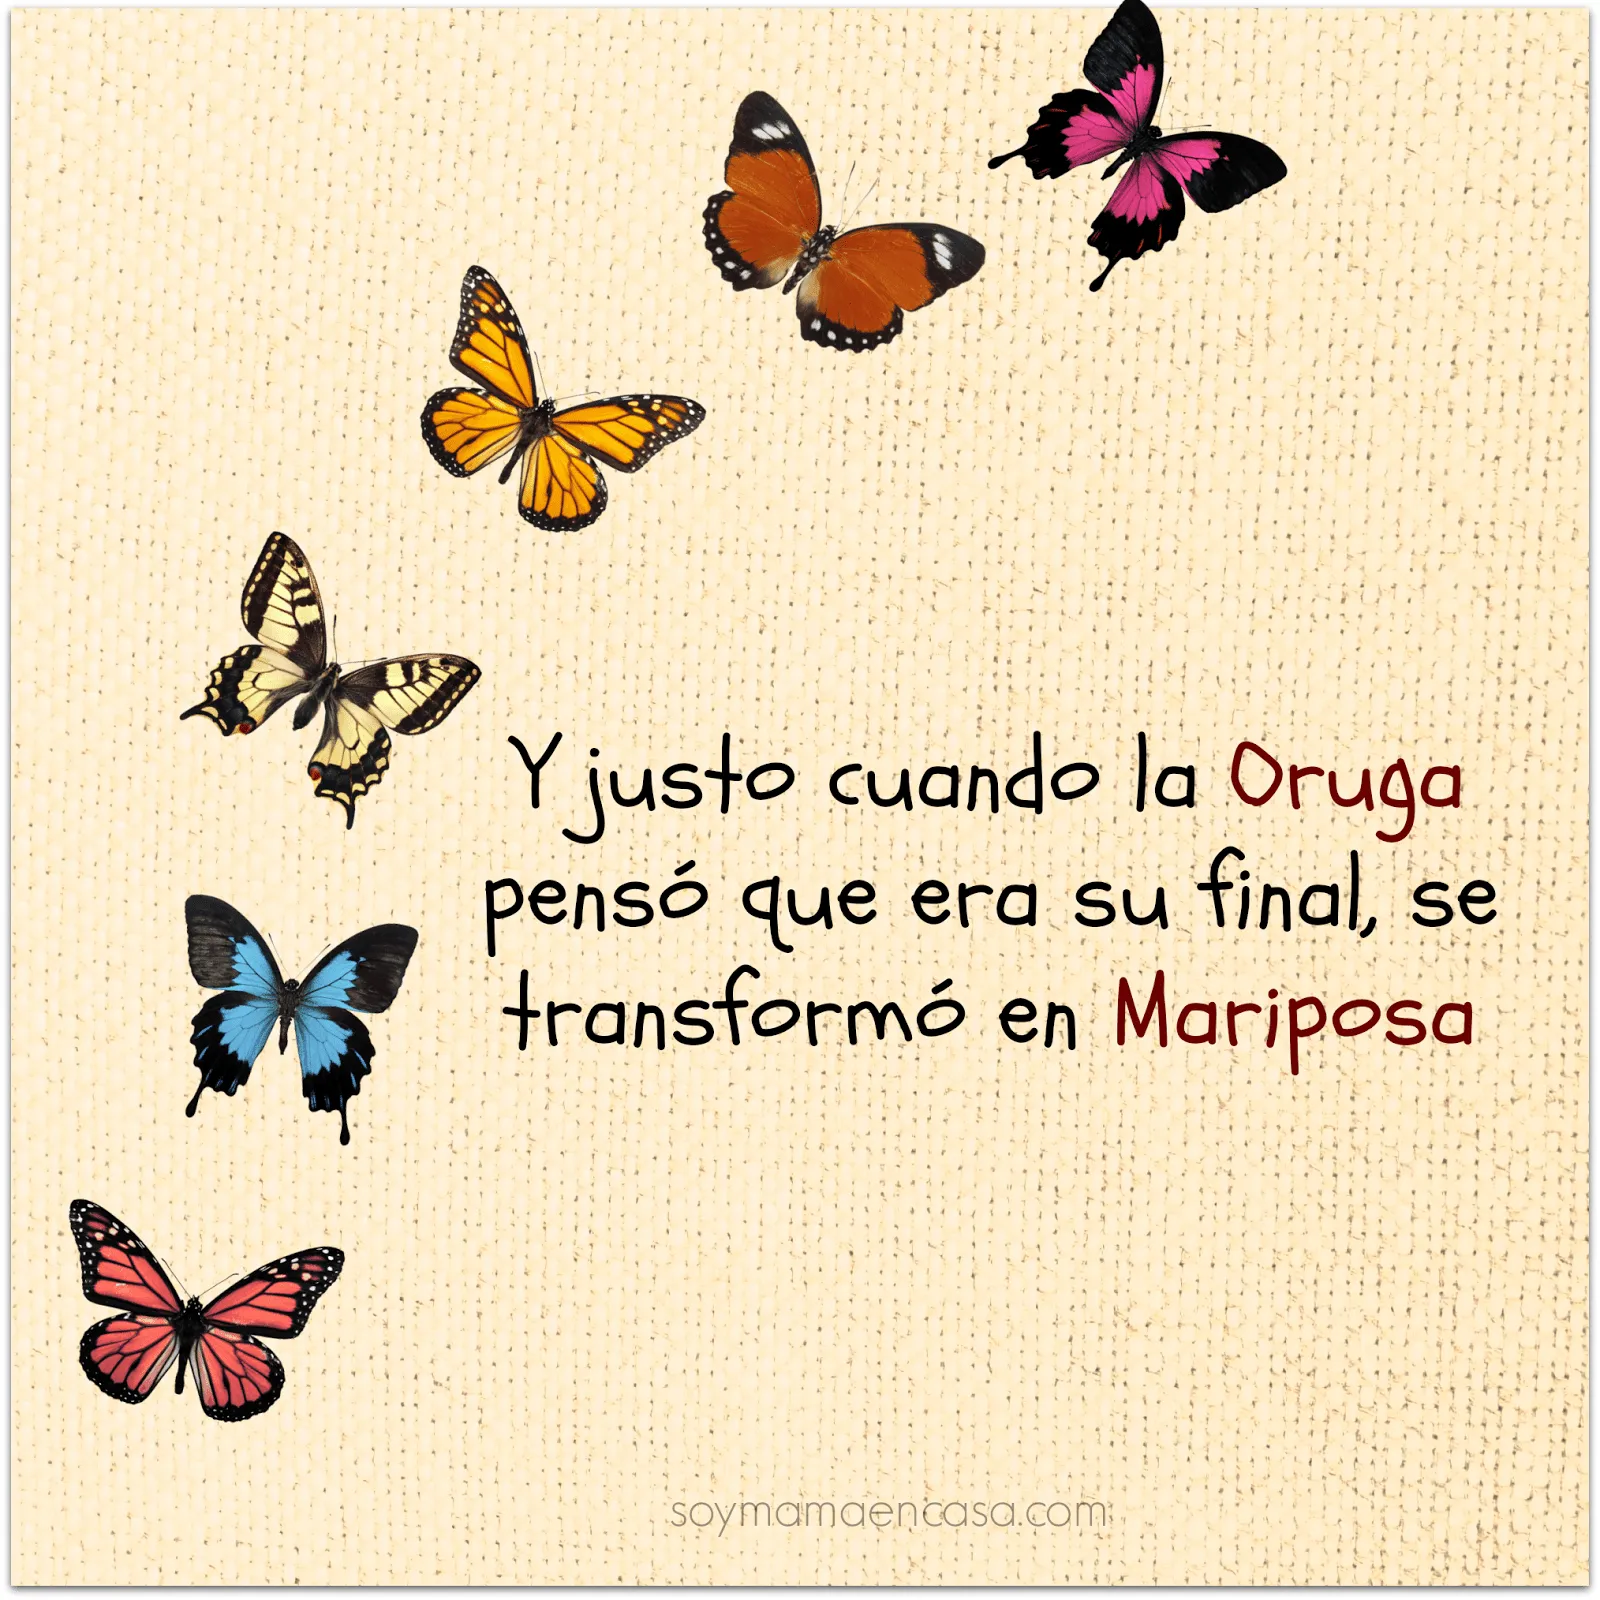 Imagenes de mariposas con frases lindas - Imagui